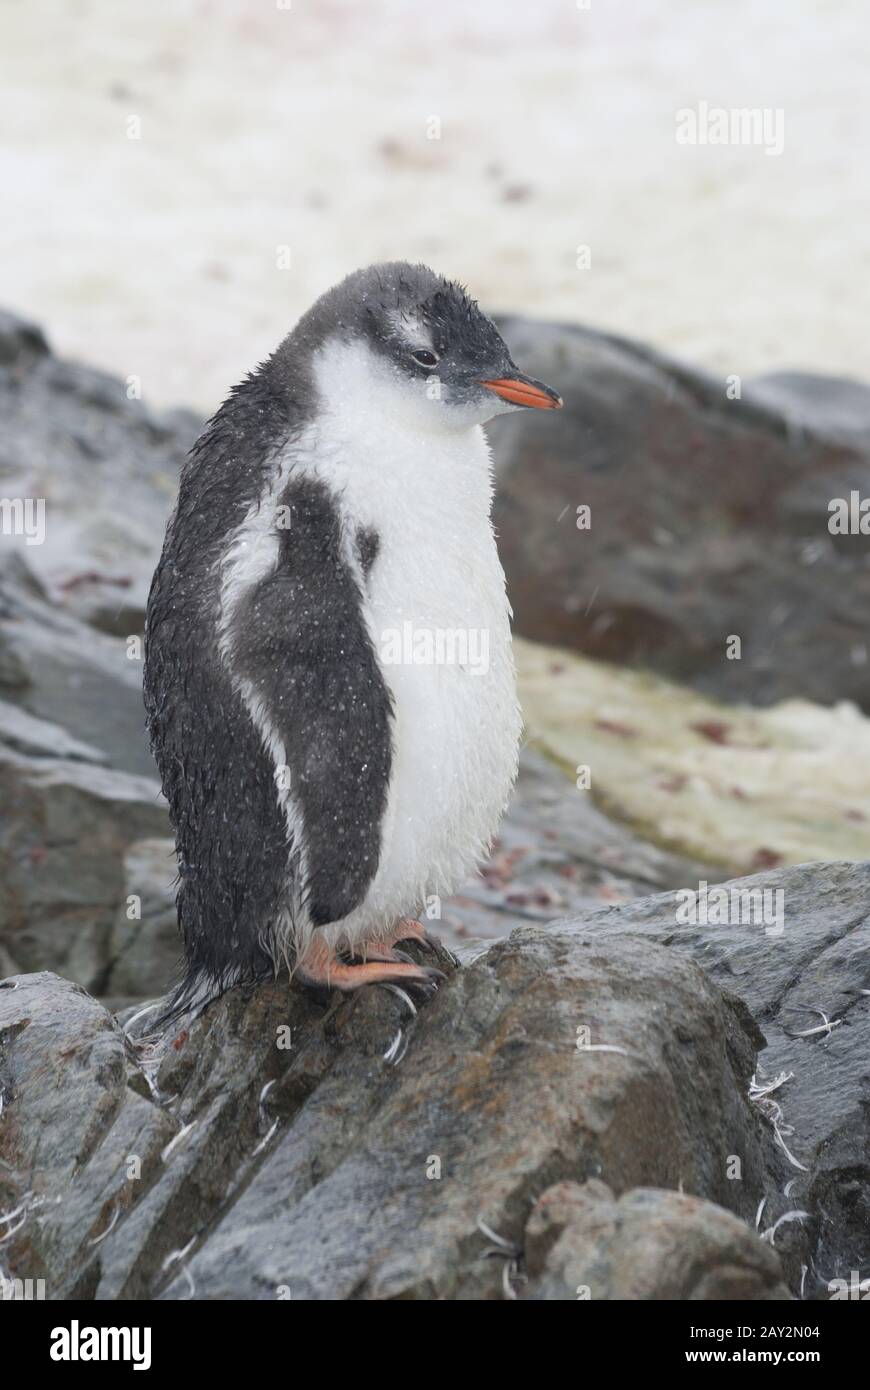 Gentoo penguin chick in the rain. Stock Photo